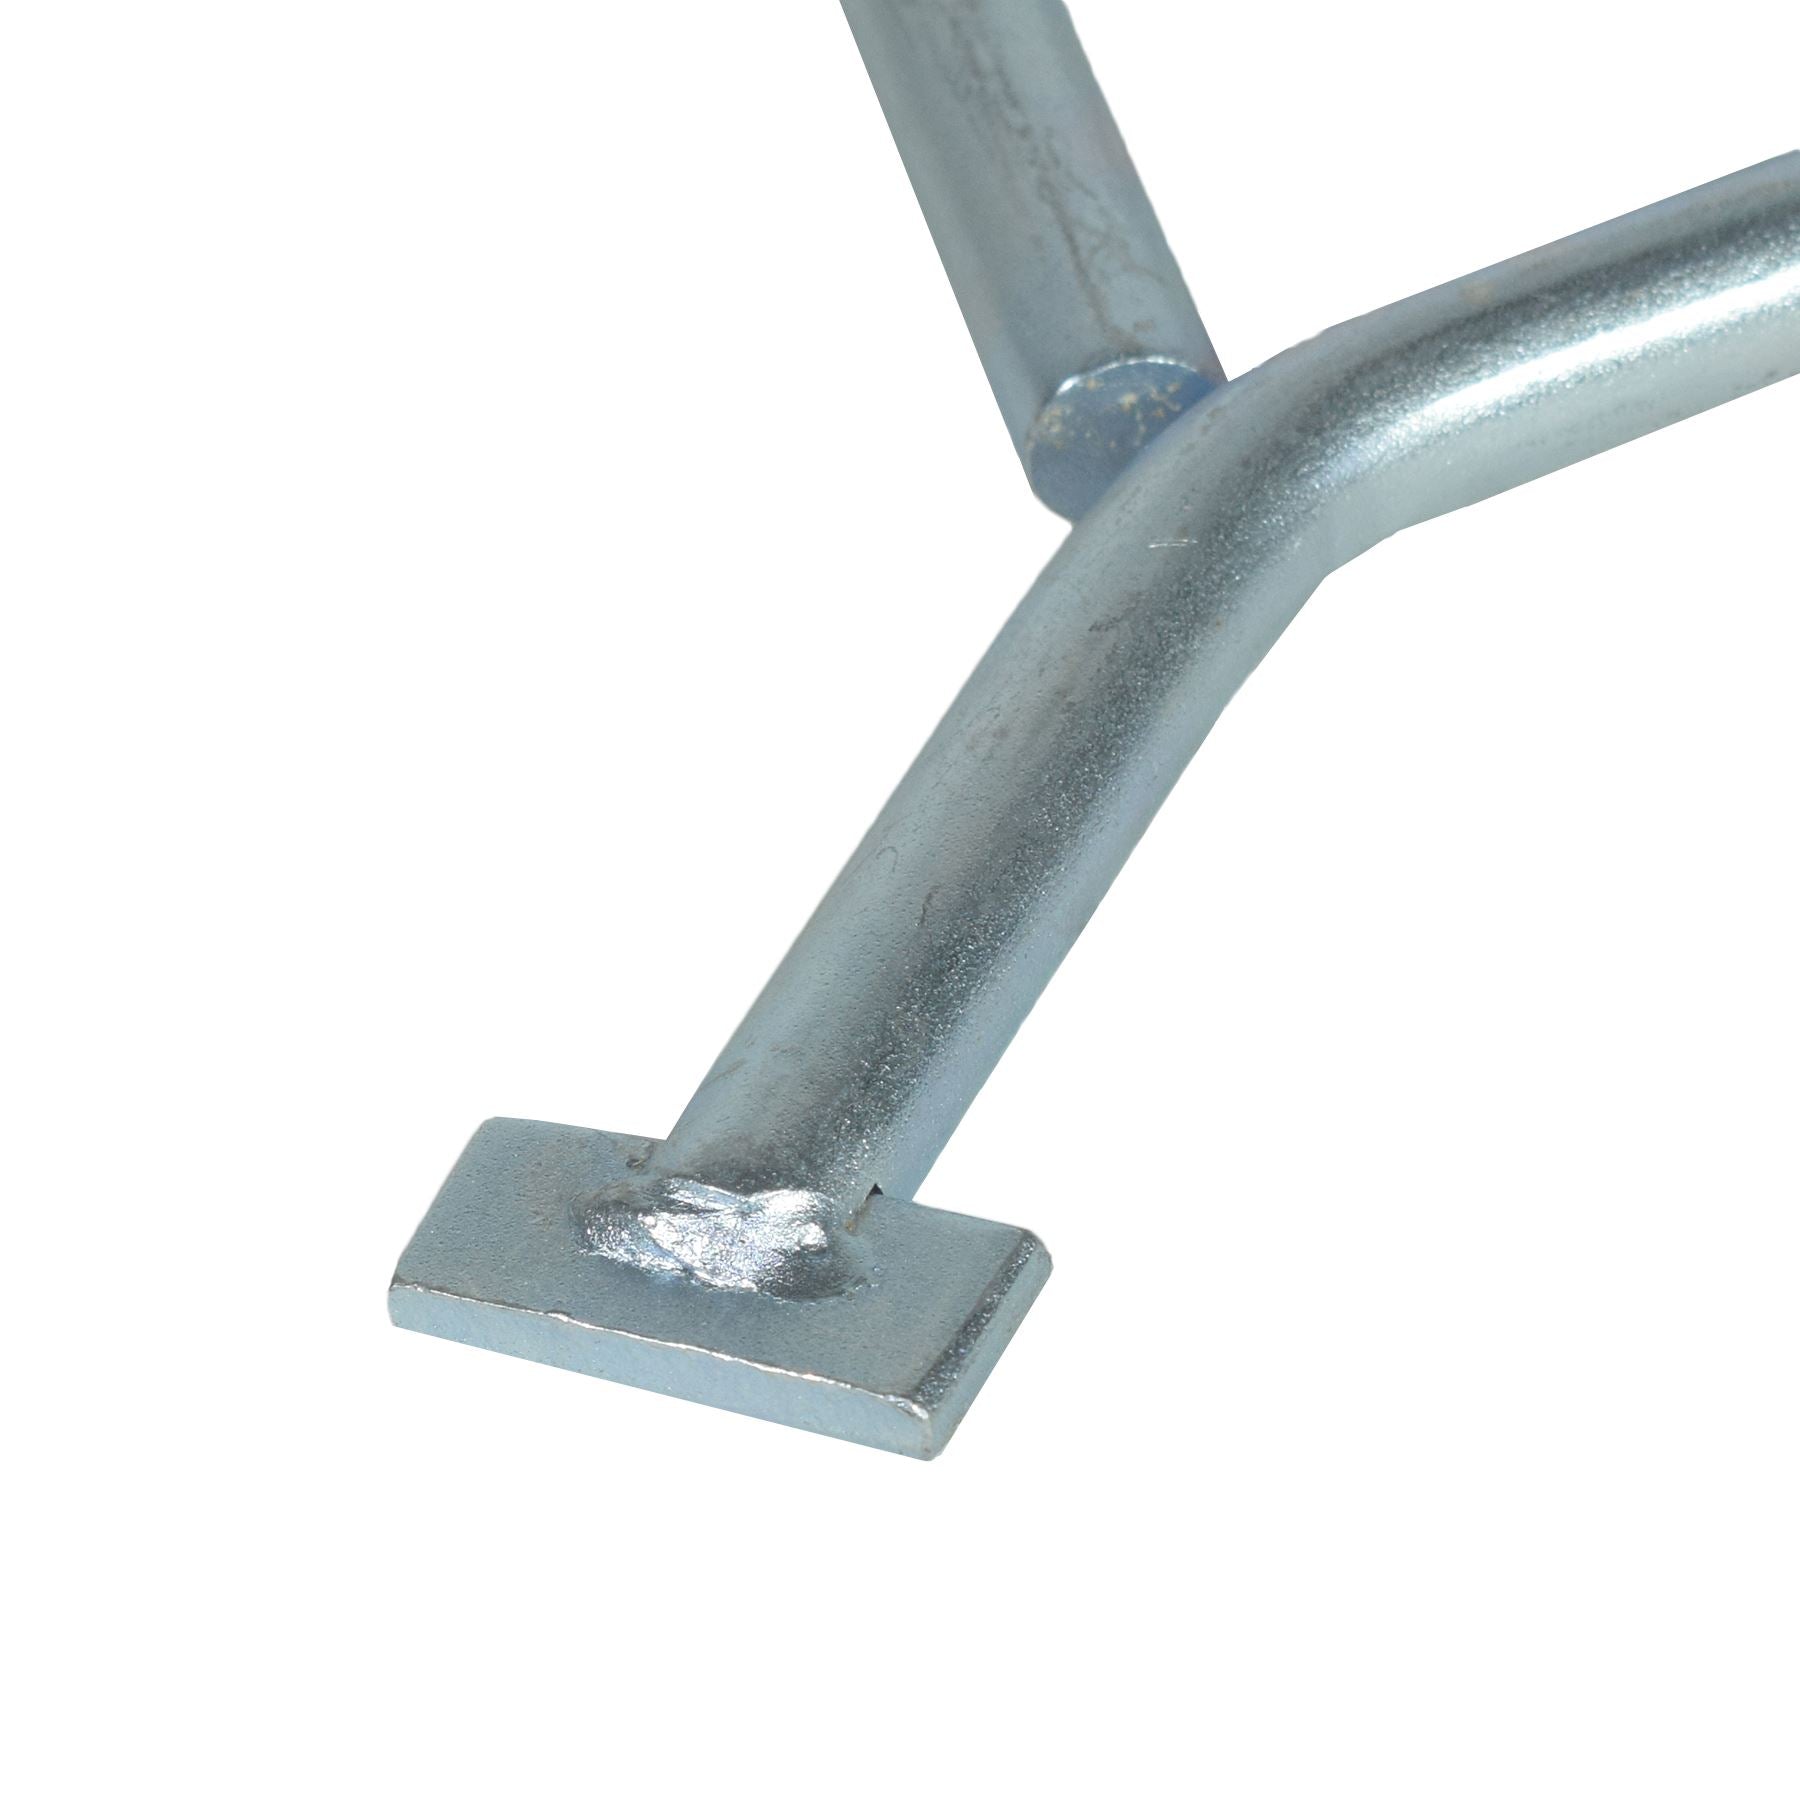 2pc Manhole Keys Lifting Drain Cover Lid Plate Lifter Plumbers 170mm T Shape